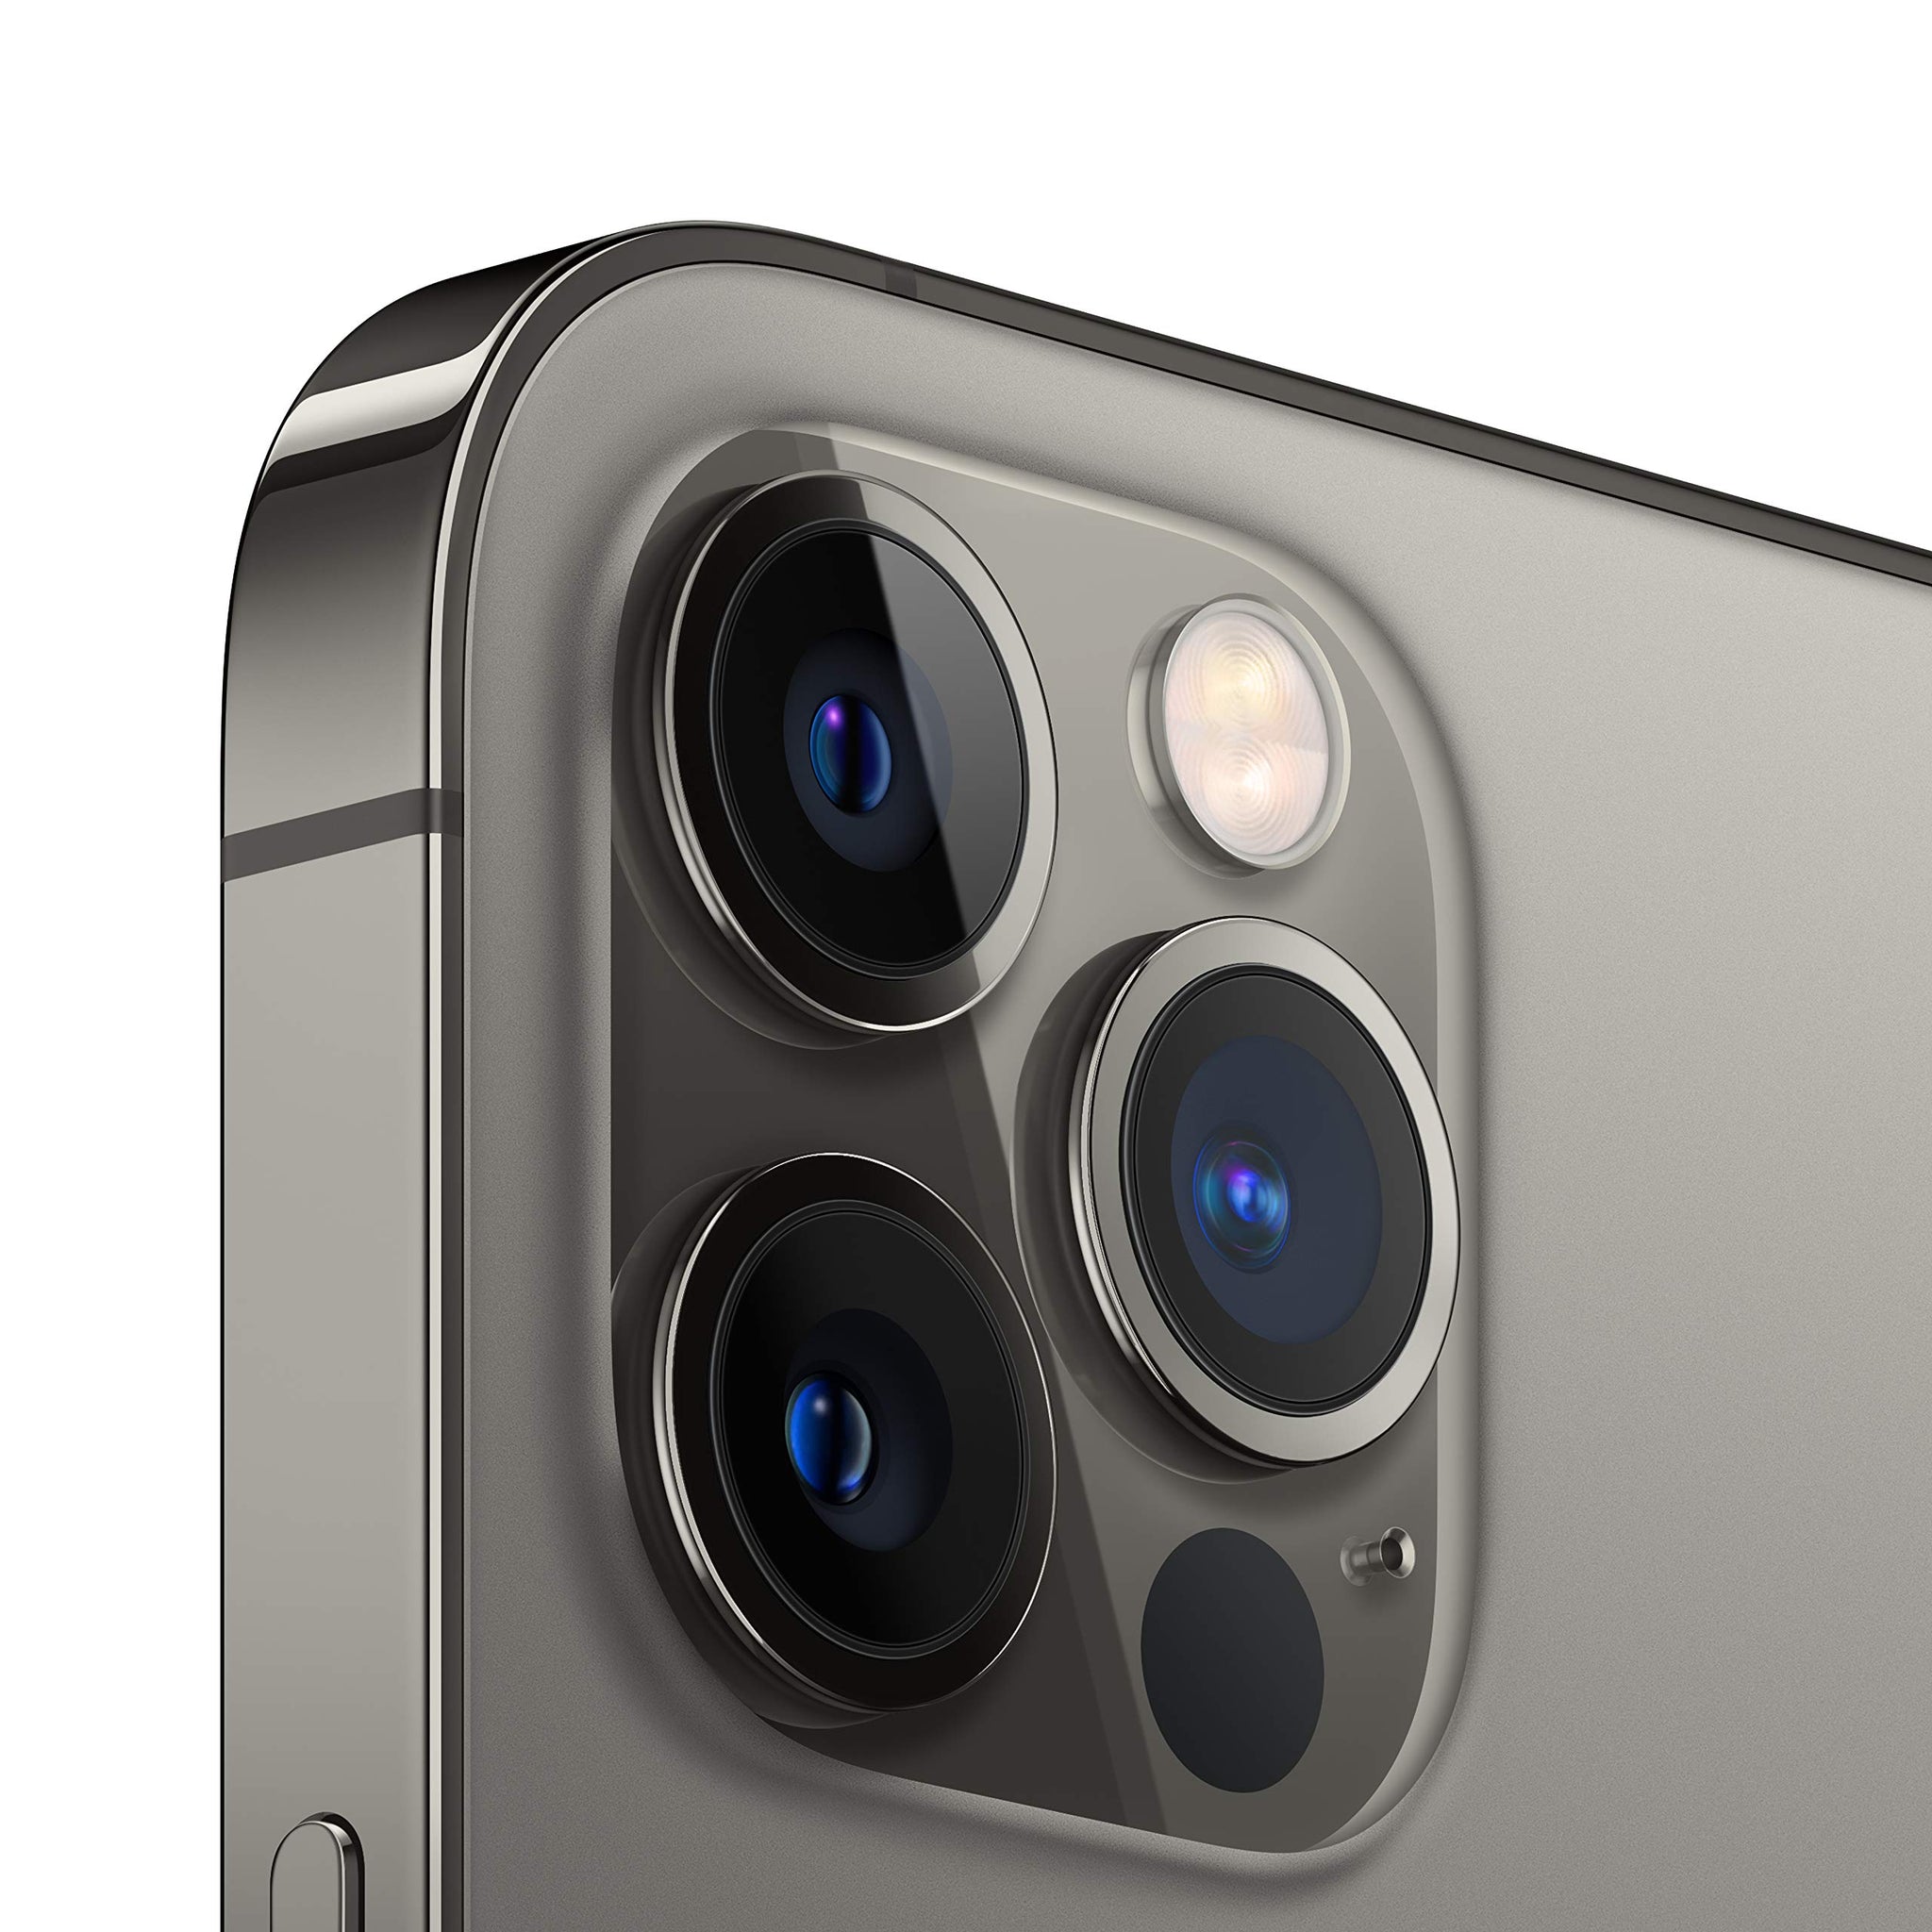 Apple iPhone 12 Pro Max 128GB - Factory Unlocked